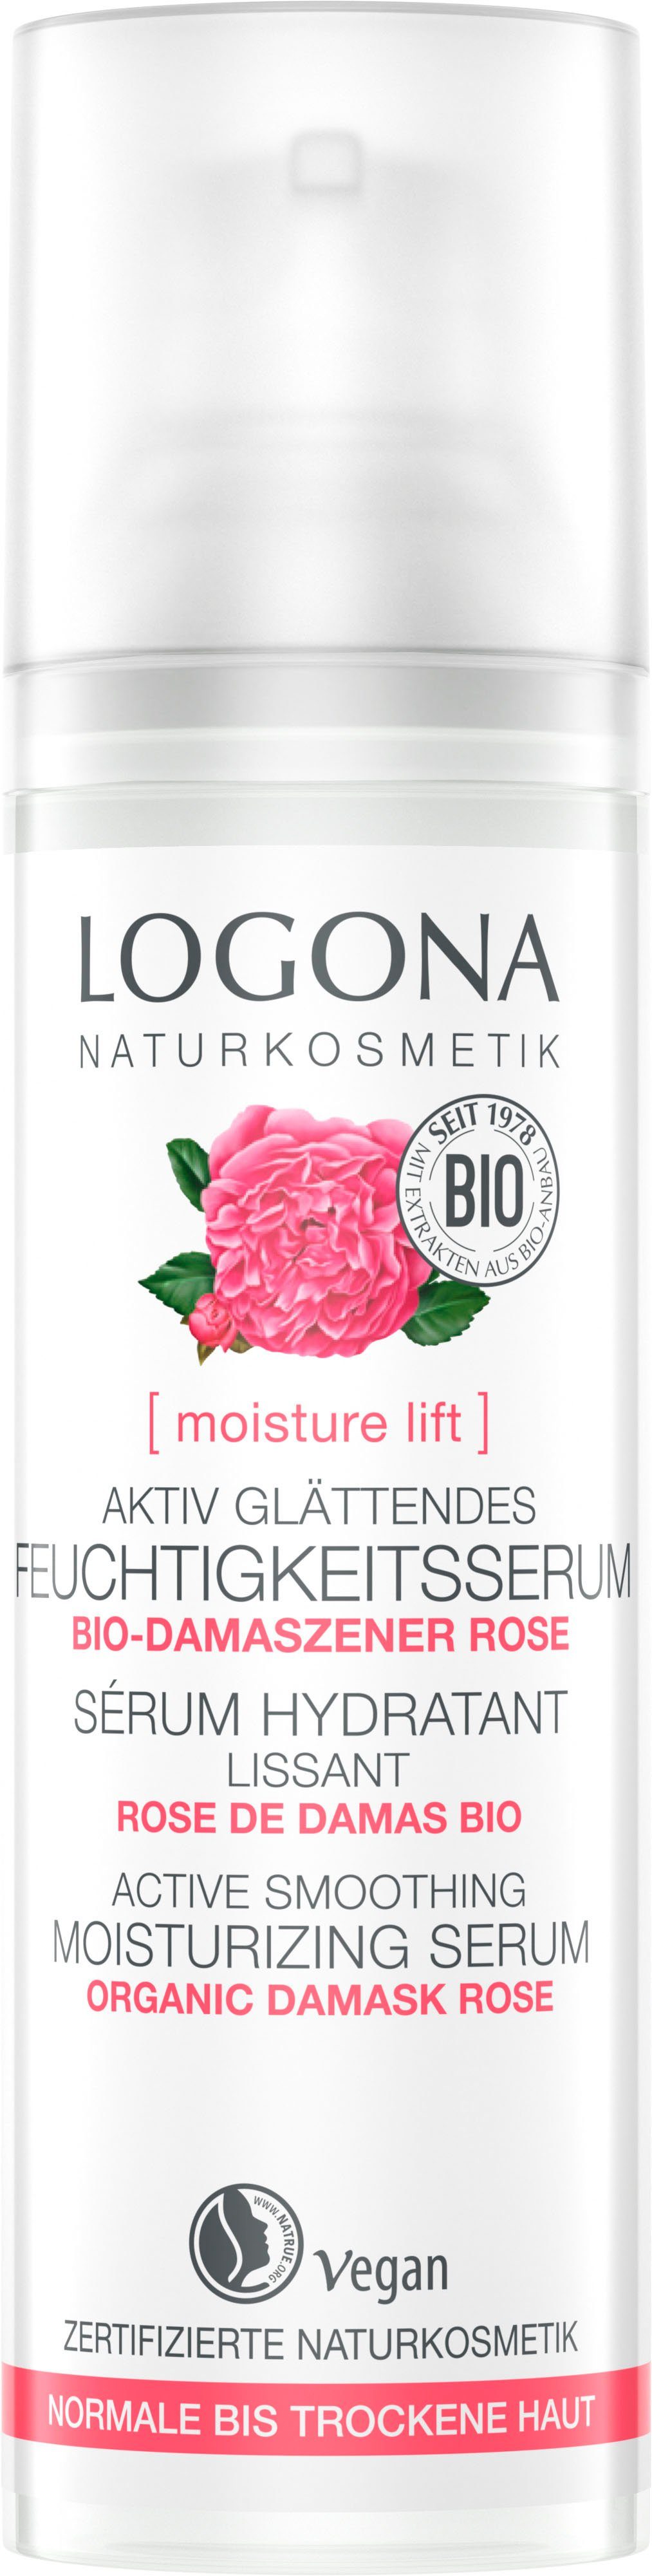 LOGONA Gesichtsserum Logona moisture lift glätt Feuchtigk.serum